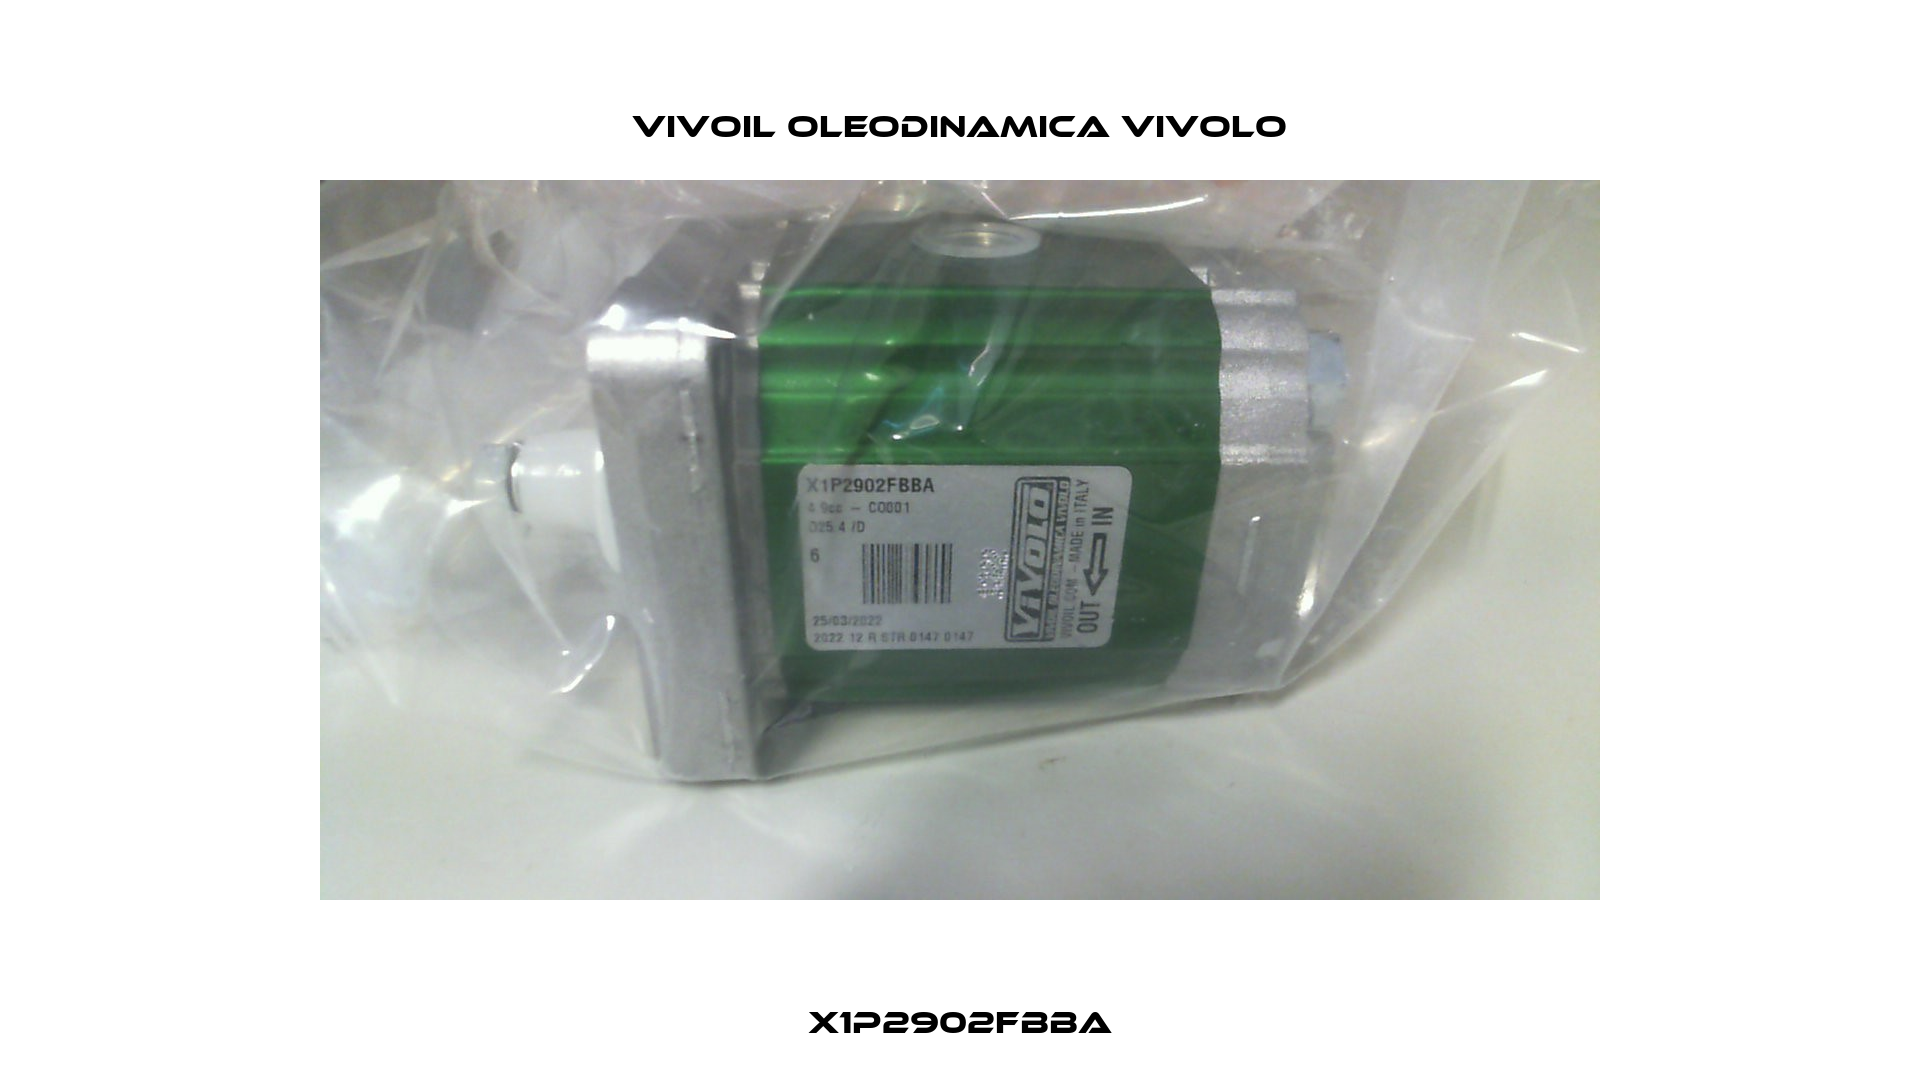 X1P2902FBBA Vivoil Oleodinamica Vivolo